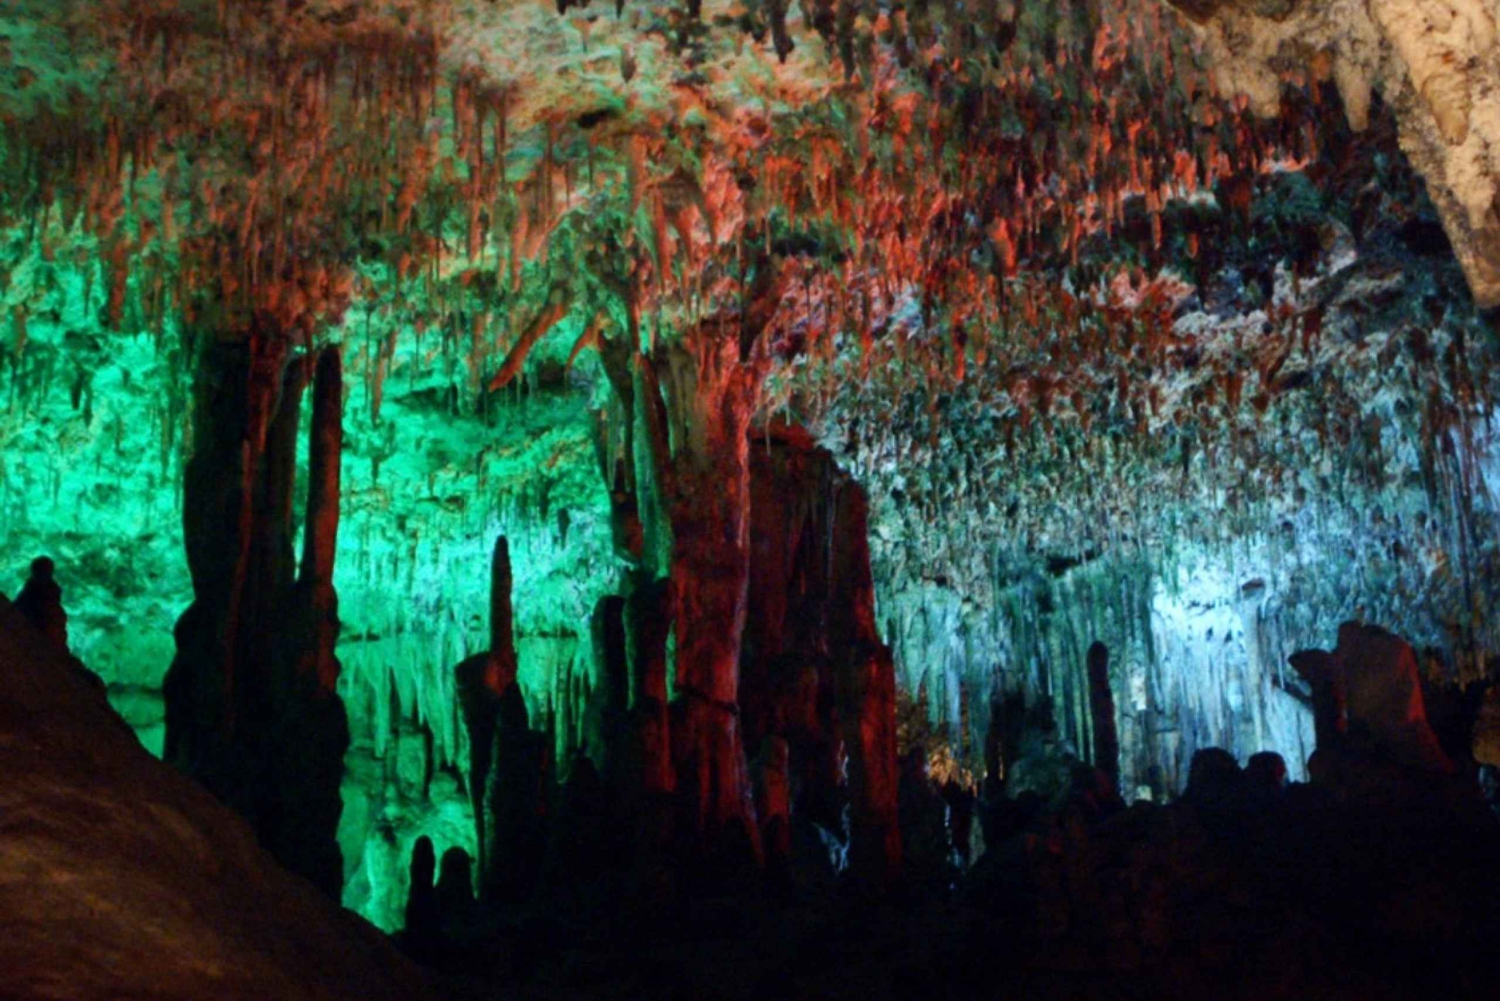 Mallorca: Caves of Hams Tour and Dinosaur Land Visit